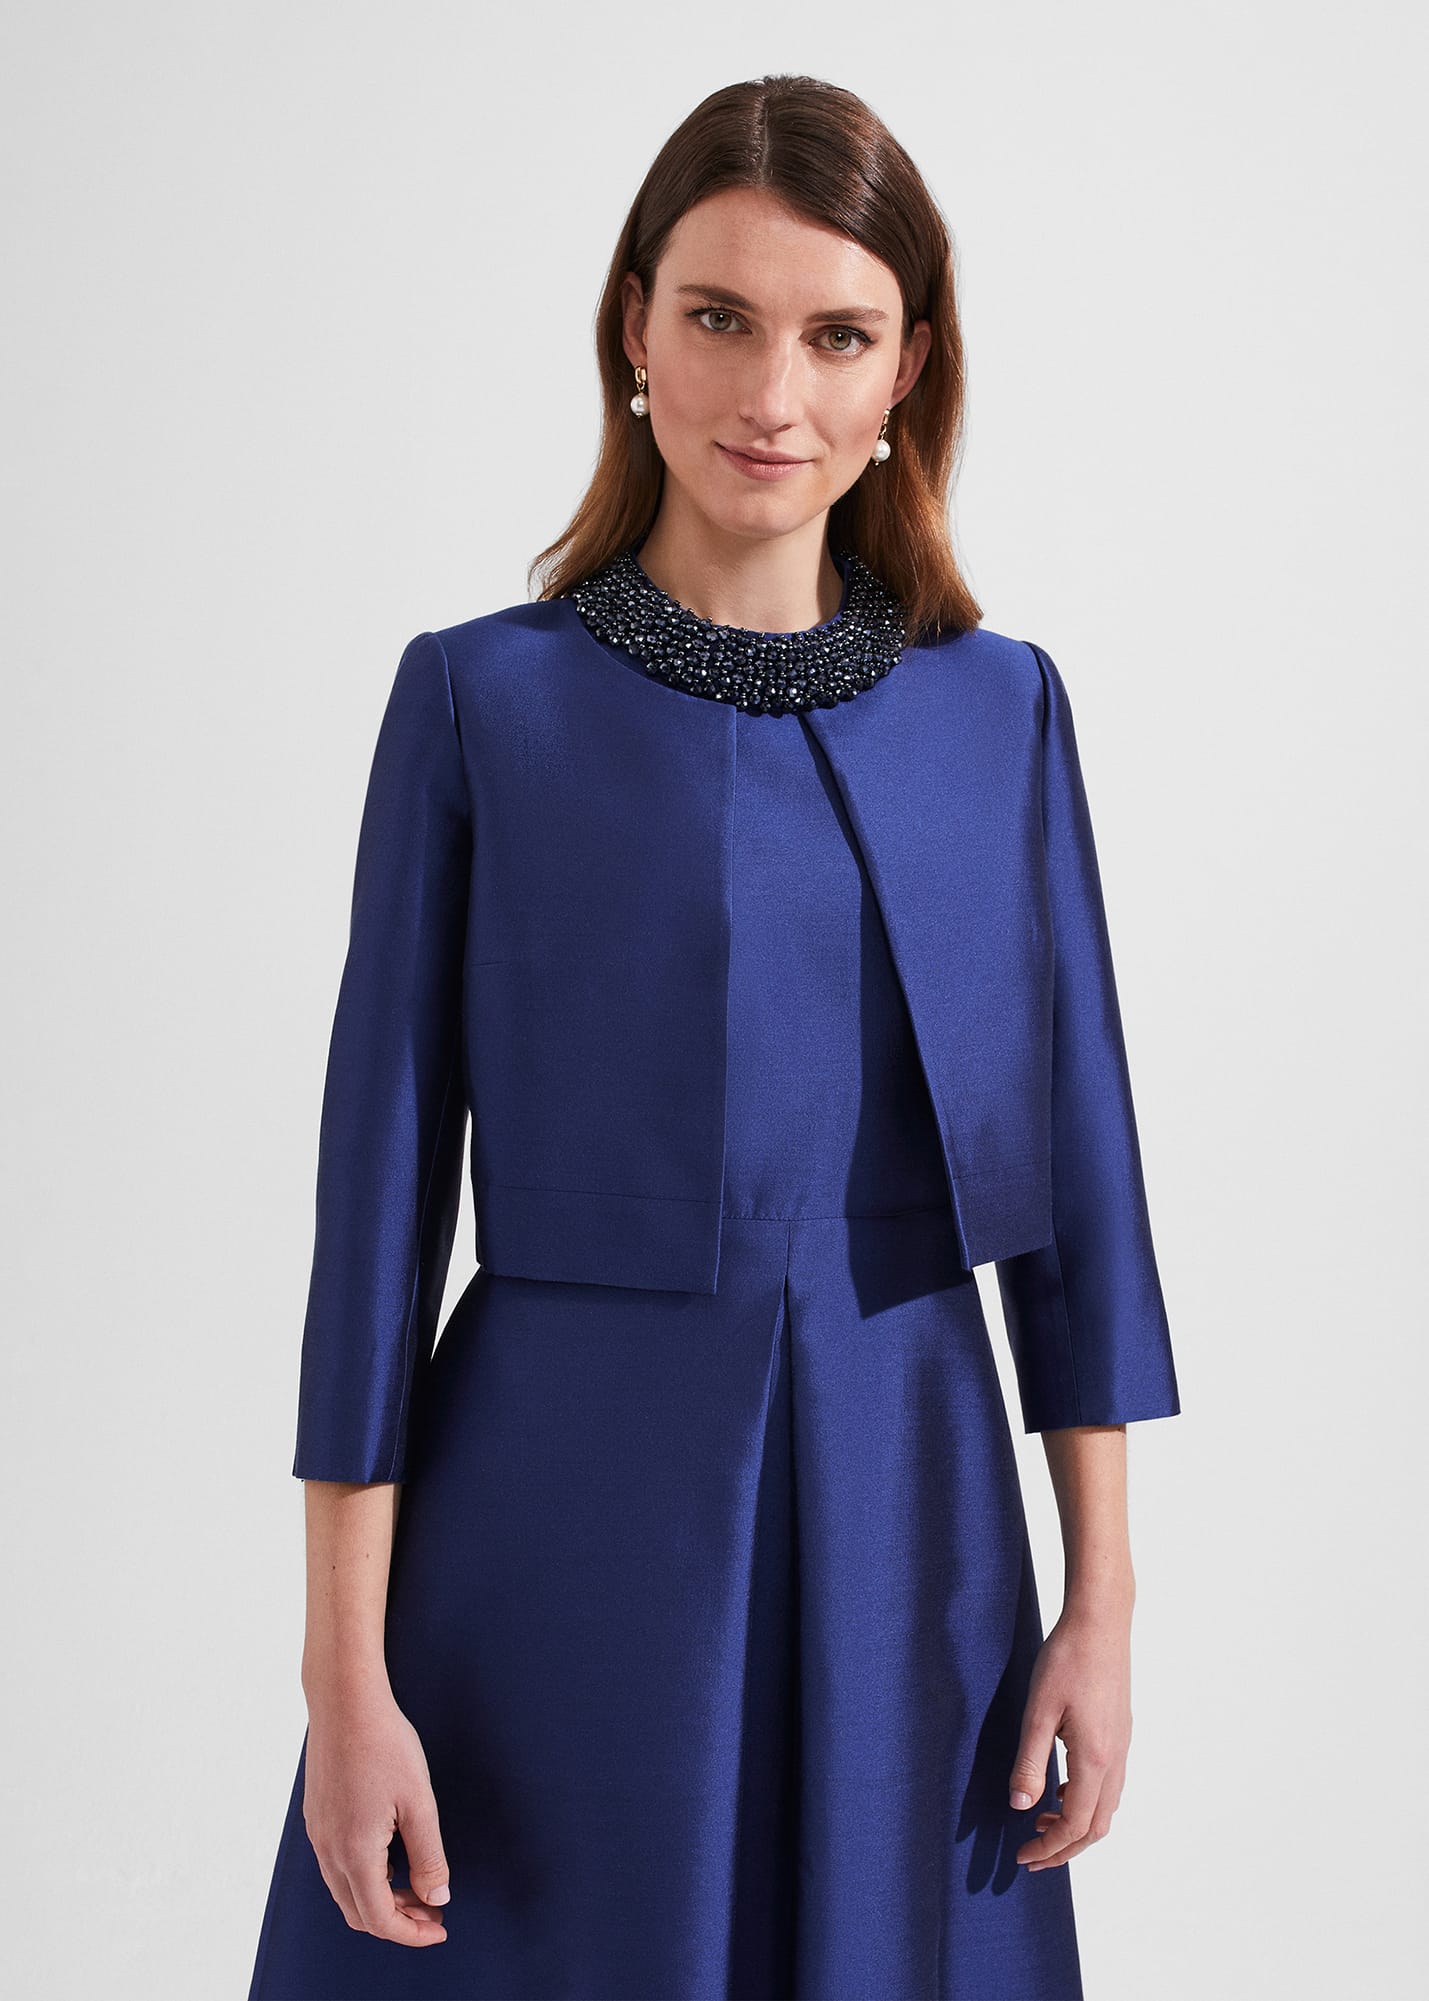 Hobbs Women's Christie Silk Wool Jacket - Royal Blue